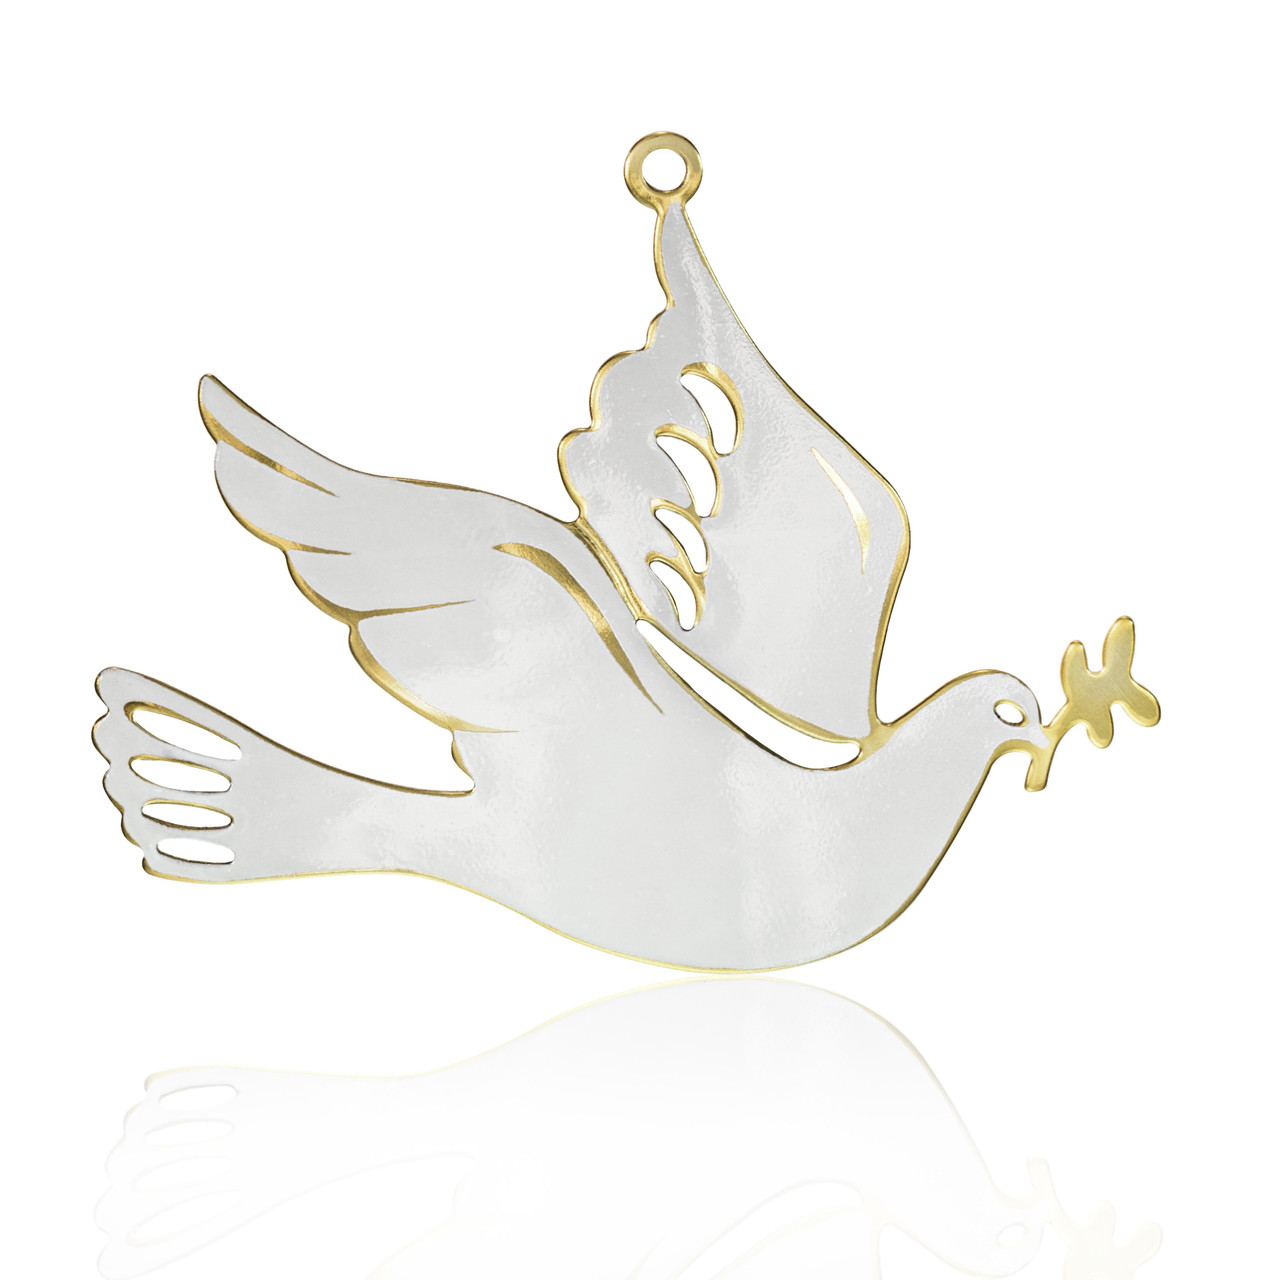 gold wedding clip art doves